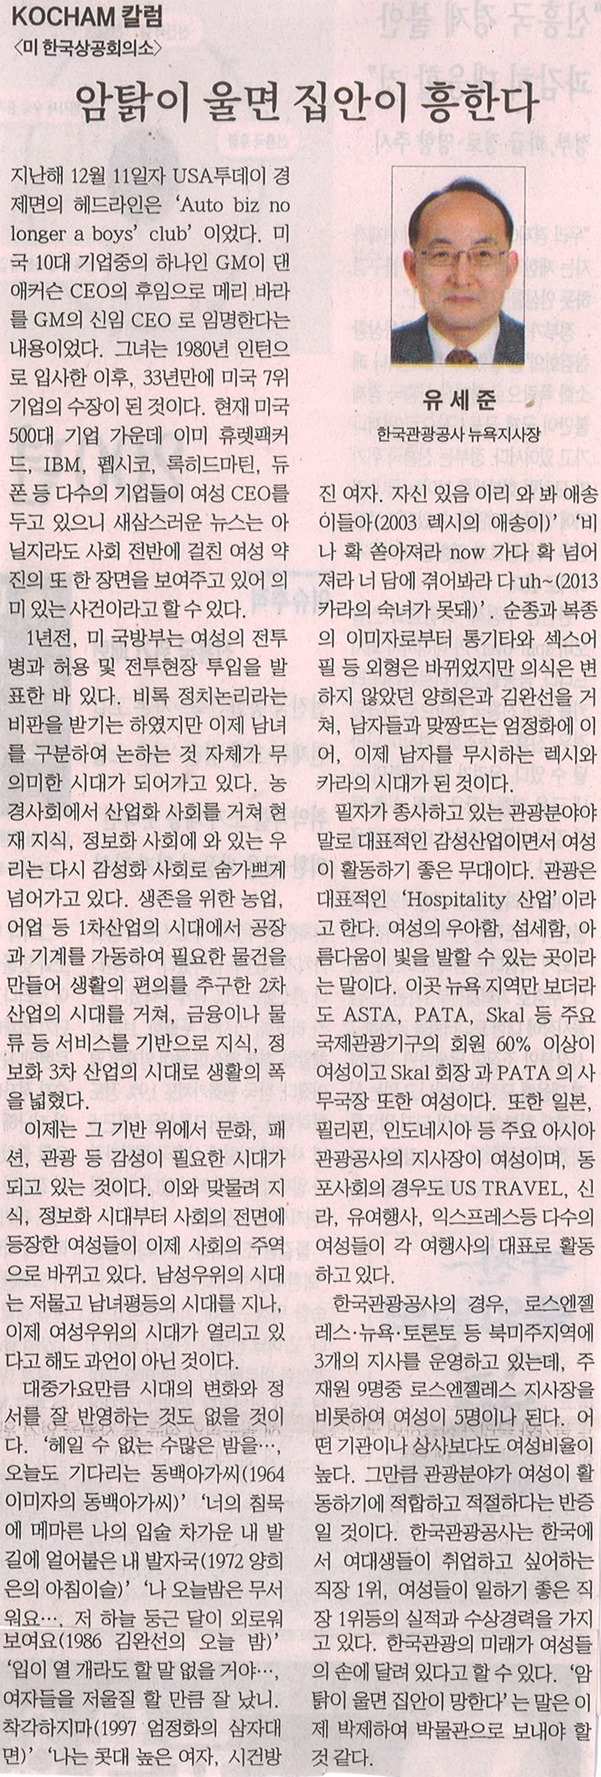 2014.01.29 KOCHAM칼럼(중앙일보 종합3면)